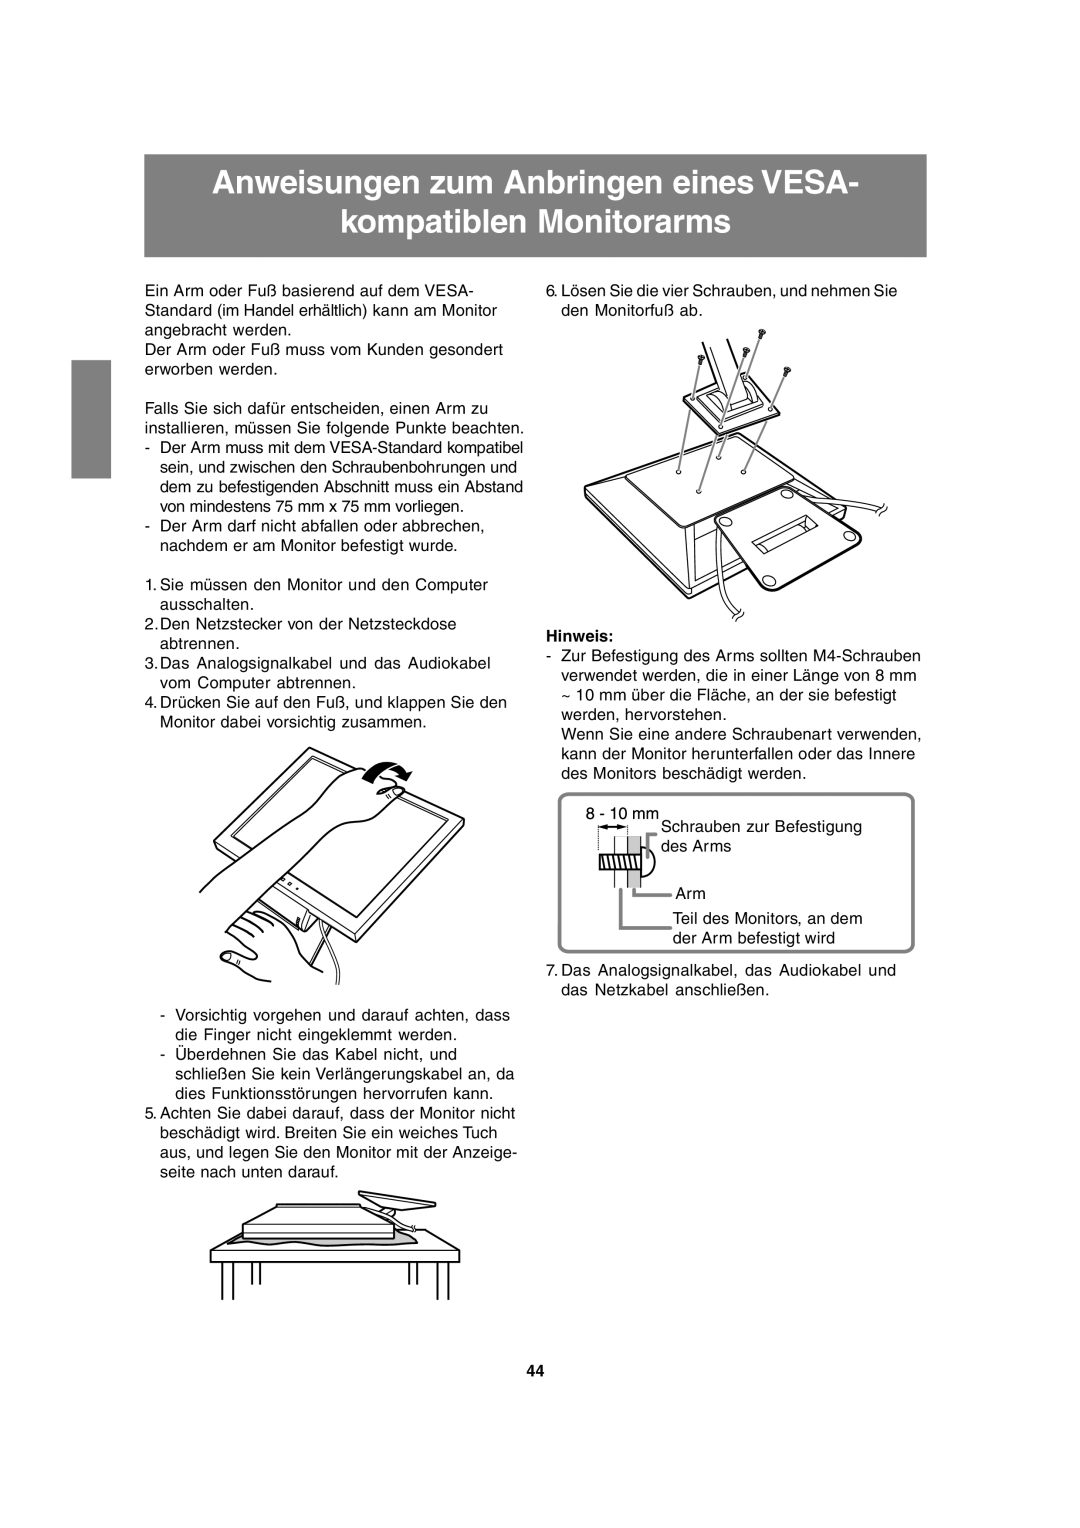 Sharp LL-T15A4 operation manual Anweisungen zum Anbringen eines VESA kompatiblen Monitorarms, Hinweis 